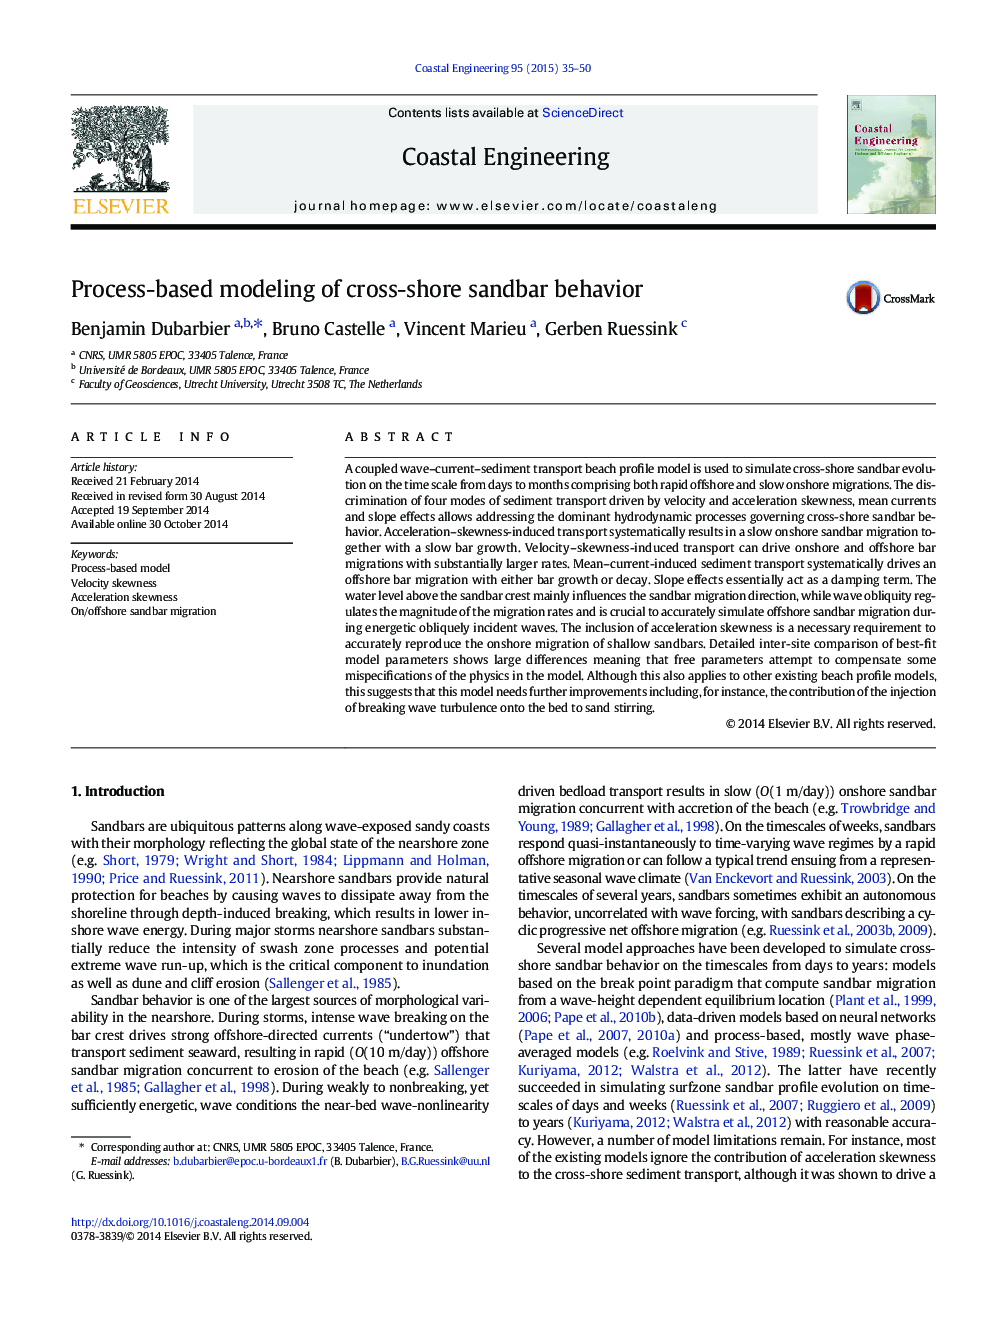 Process-based modeling of cross-shore sandbar behavior